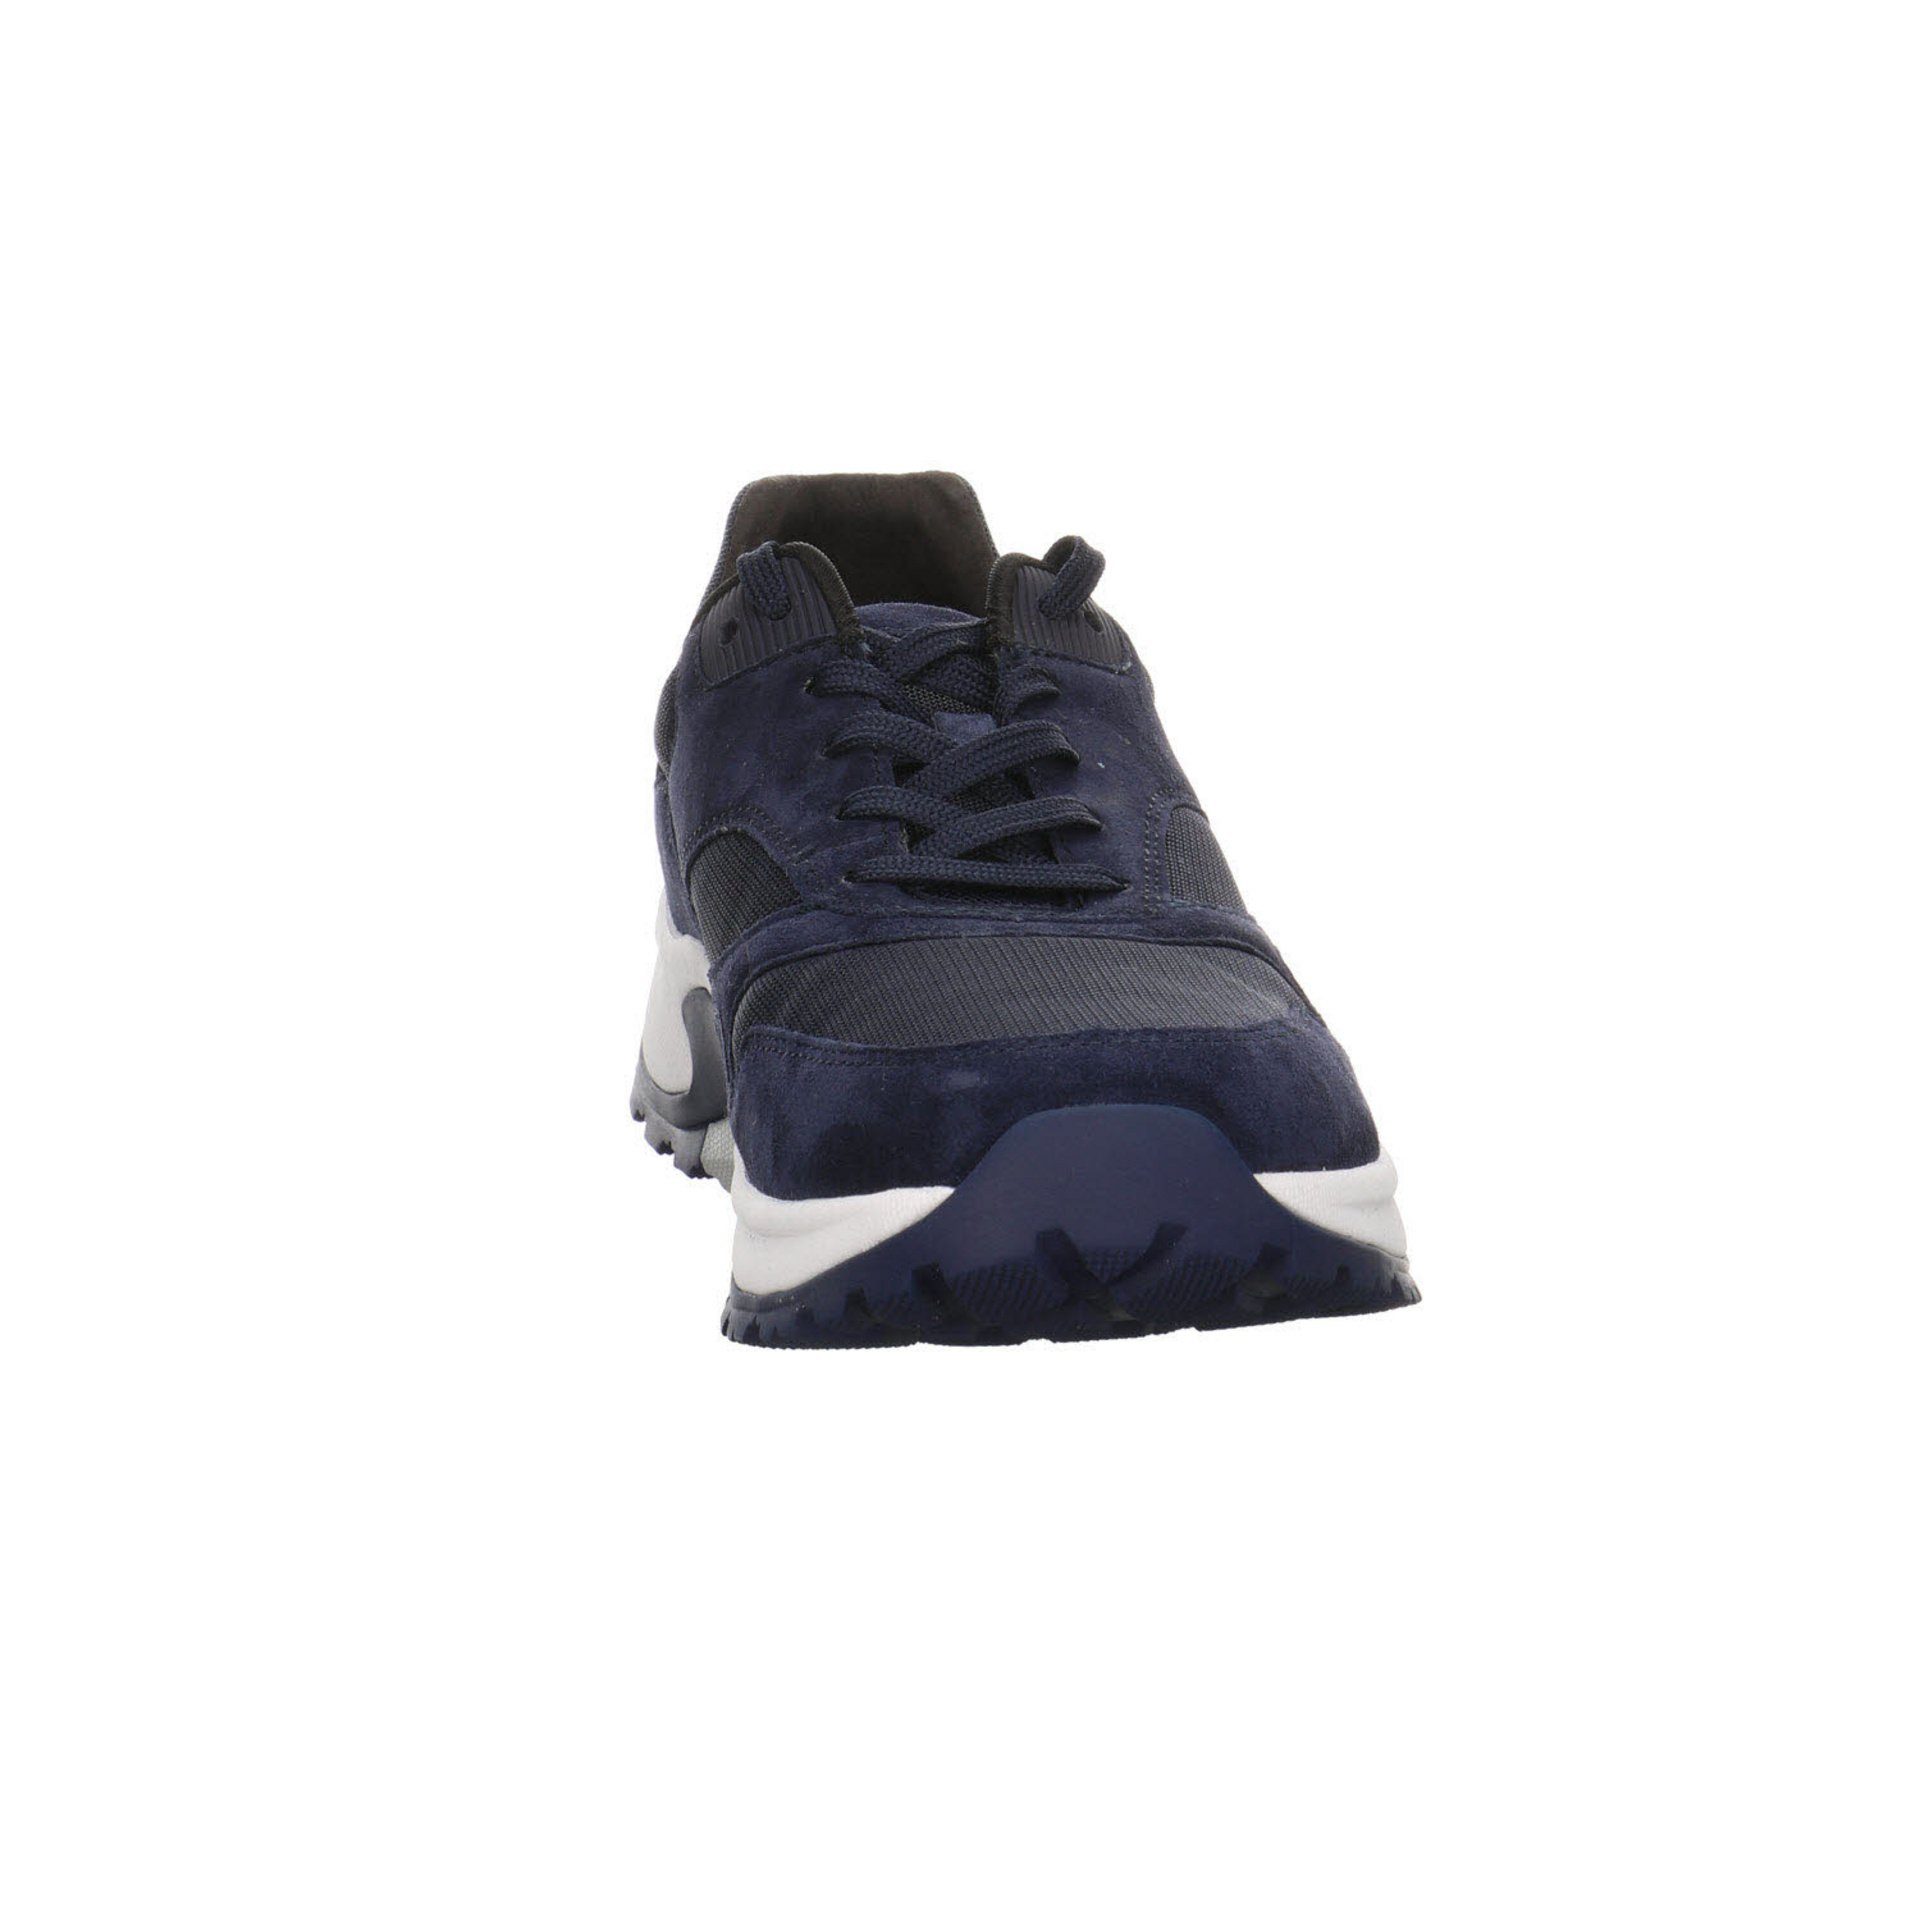 Pius Herren Rollingsoft dunkel Sneaker Schnürschuh Sneaker Leder-/Textilkombination Schuhe blau Gabor